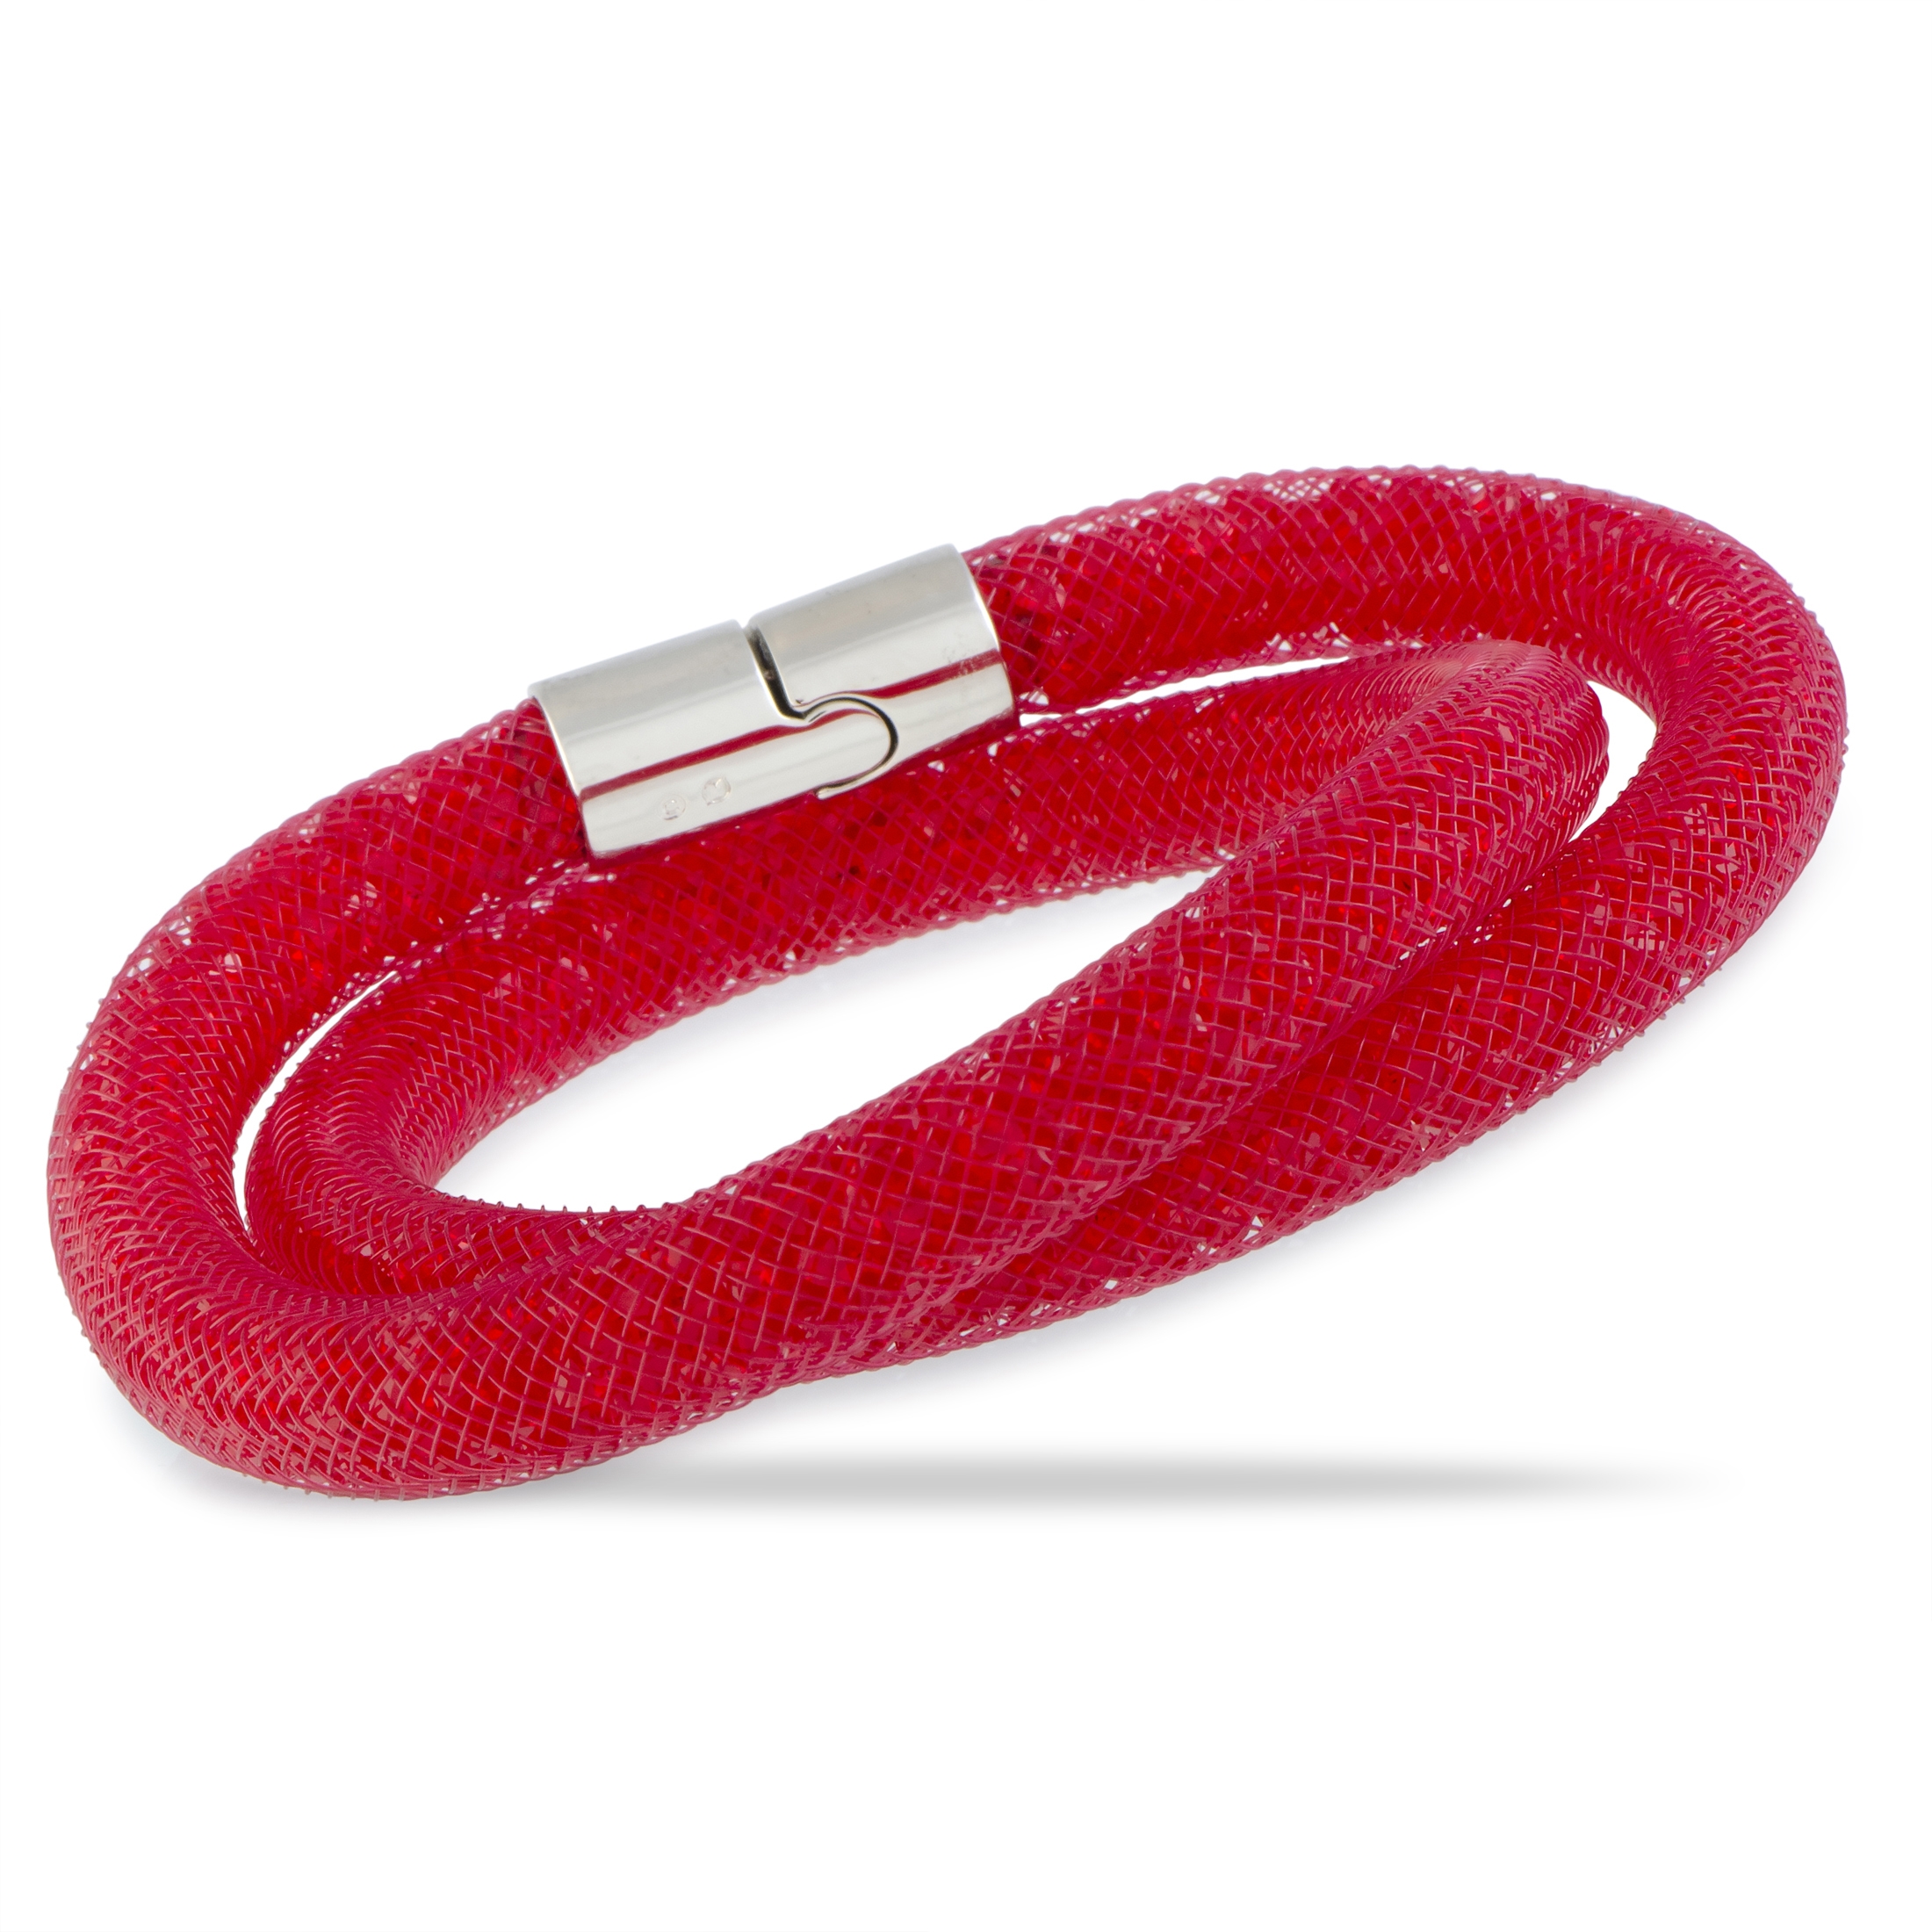 Swarovski Stardust Red Crystals Double Bracelet - Small 5185873-S